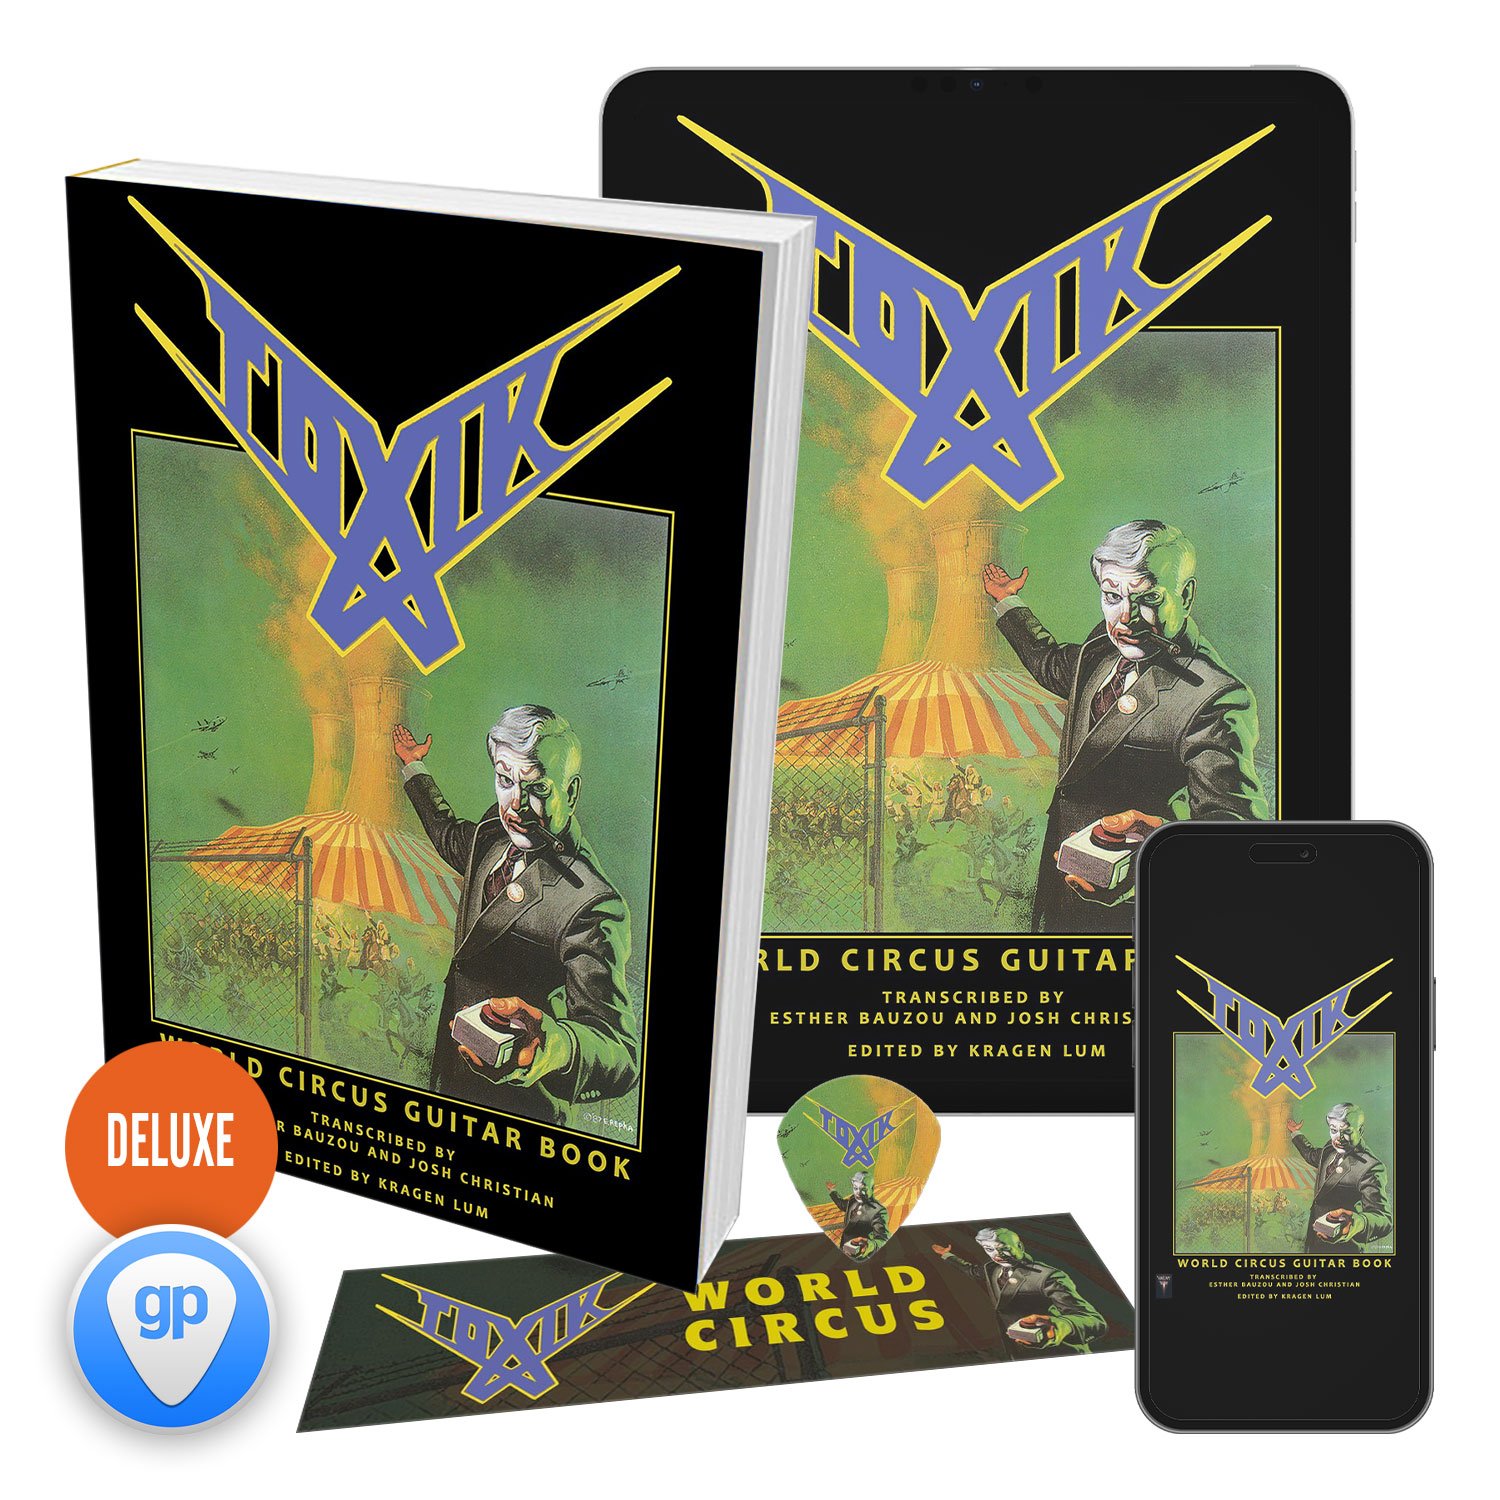 Toxik - World Circus Guitar Book (Deluxe Print Edition + Digital 